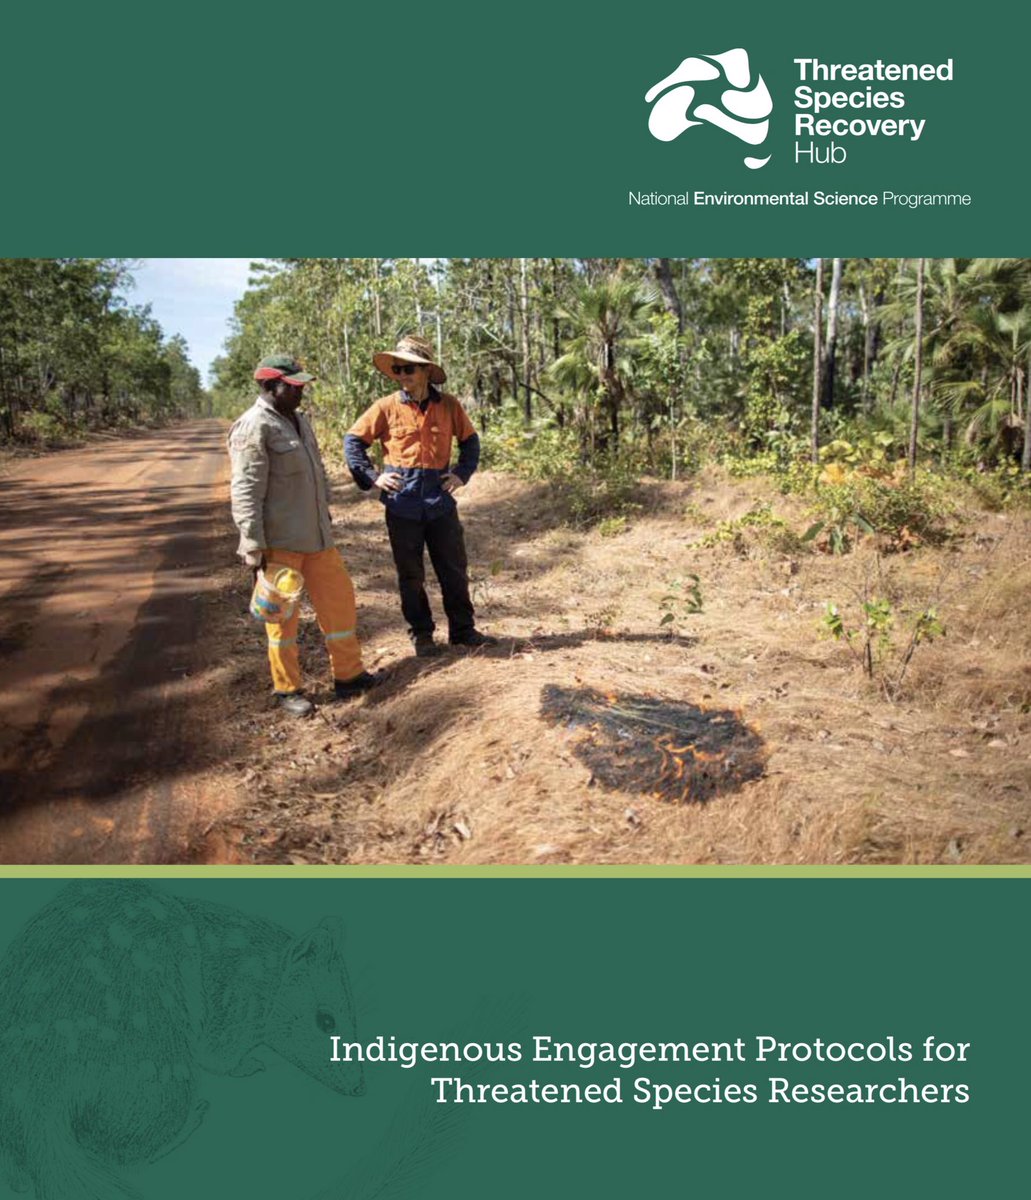 Indigenous Engagement Protocols for Threatened Species Researchers 
Download from here: nespthreatenedspecies.edu.au/TSR%20Hub%20in…
Via @bradmoggo @NESPNorthern @TSR_Hub 
#ThreatenedSpecies #TraditionalEcologicalKnowledge